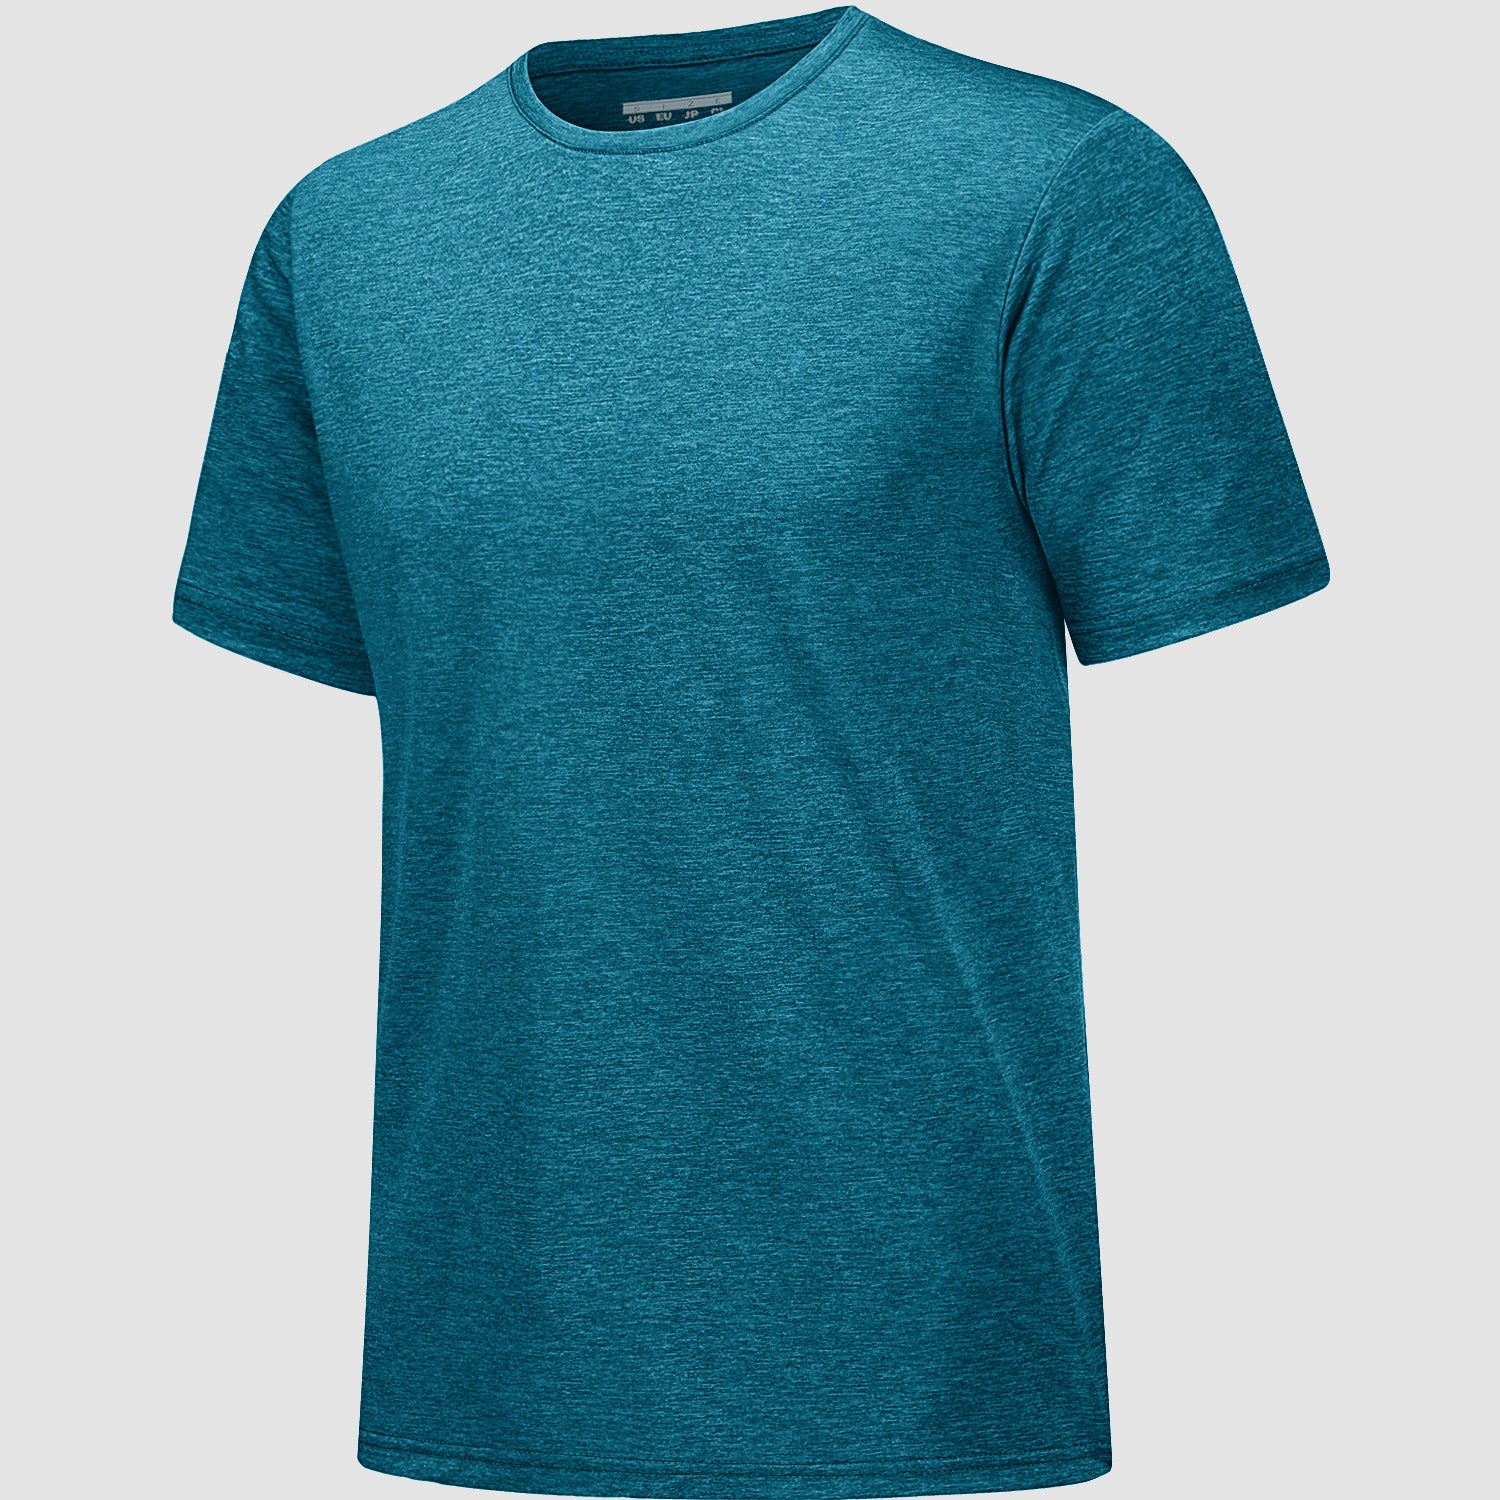 Shop Classic T-Shirts & Polos for Men Online